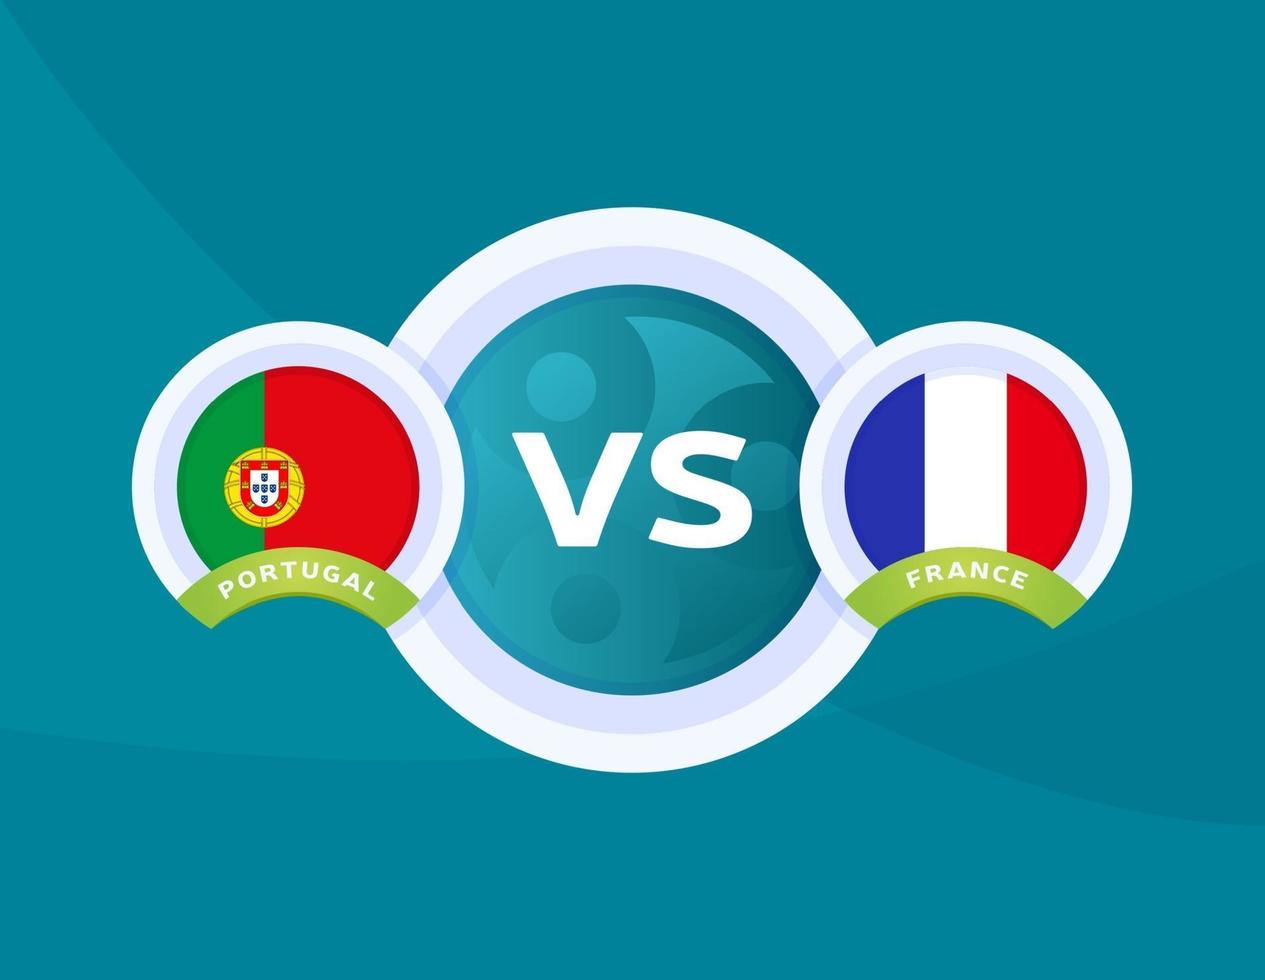 fútbol portugal vs francia vector